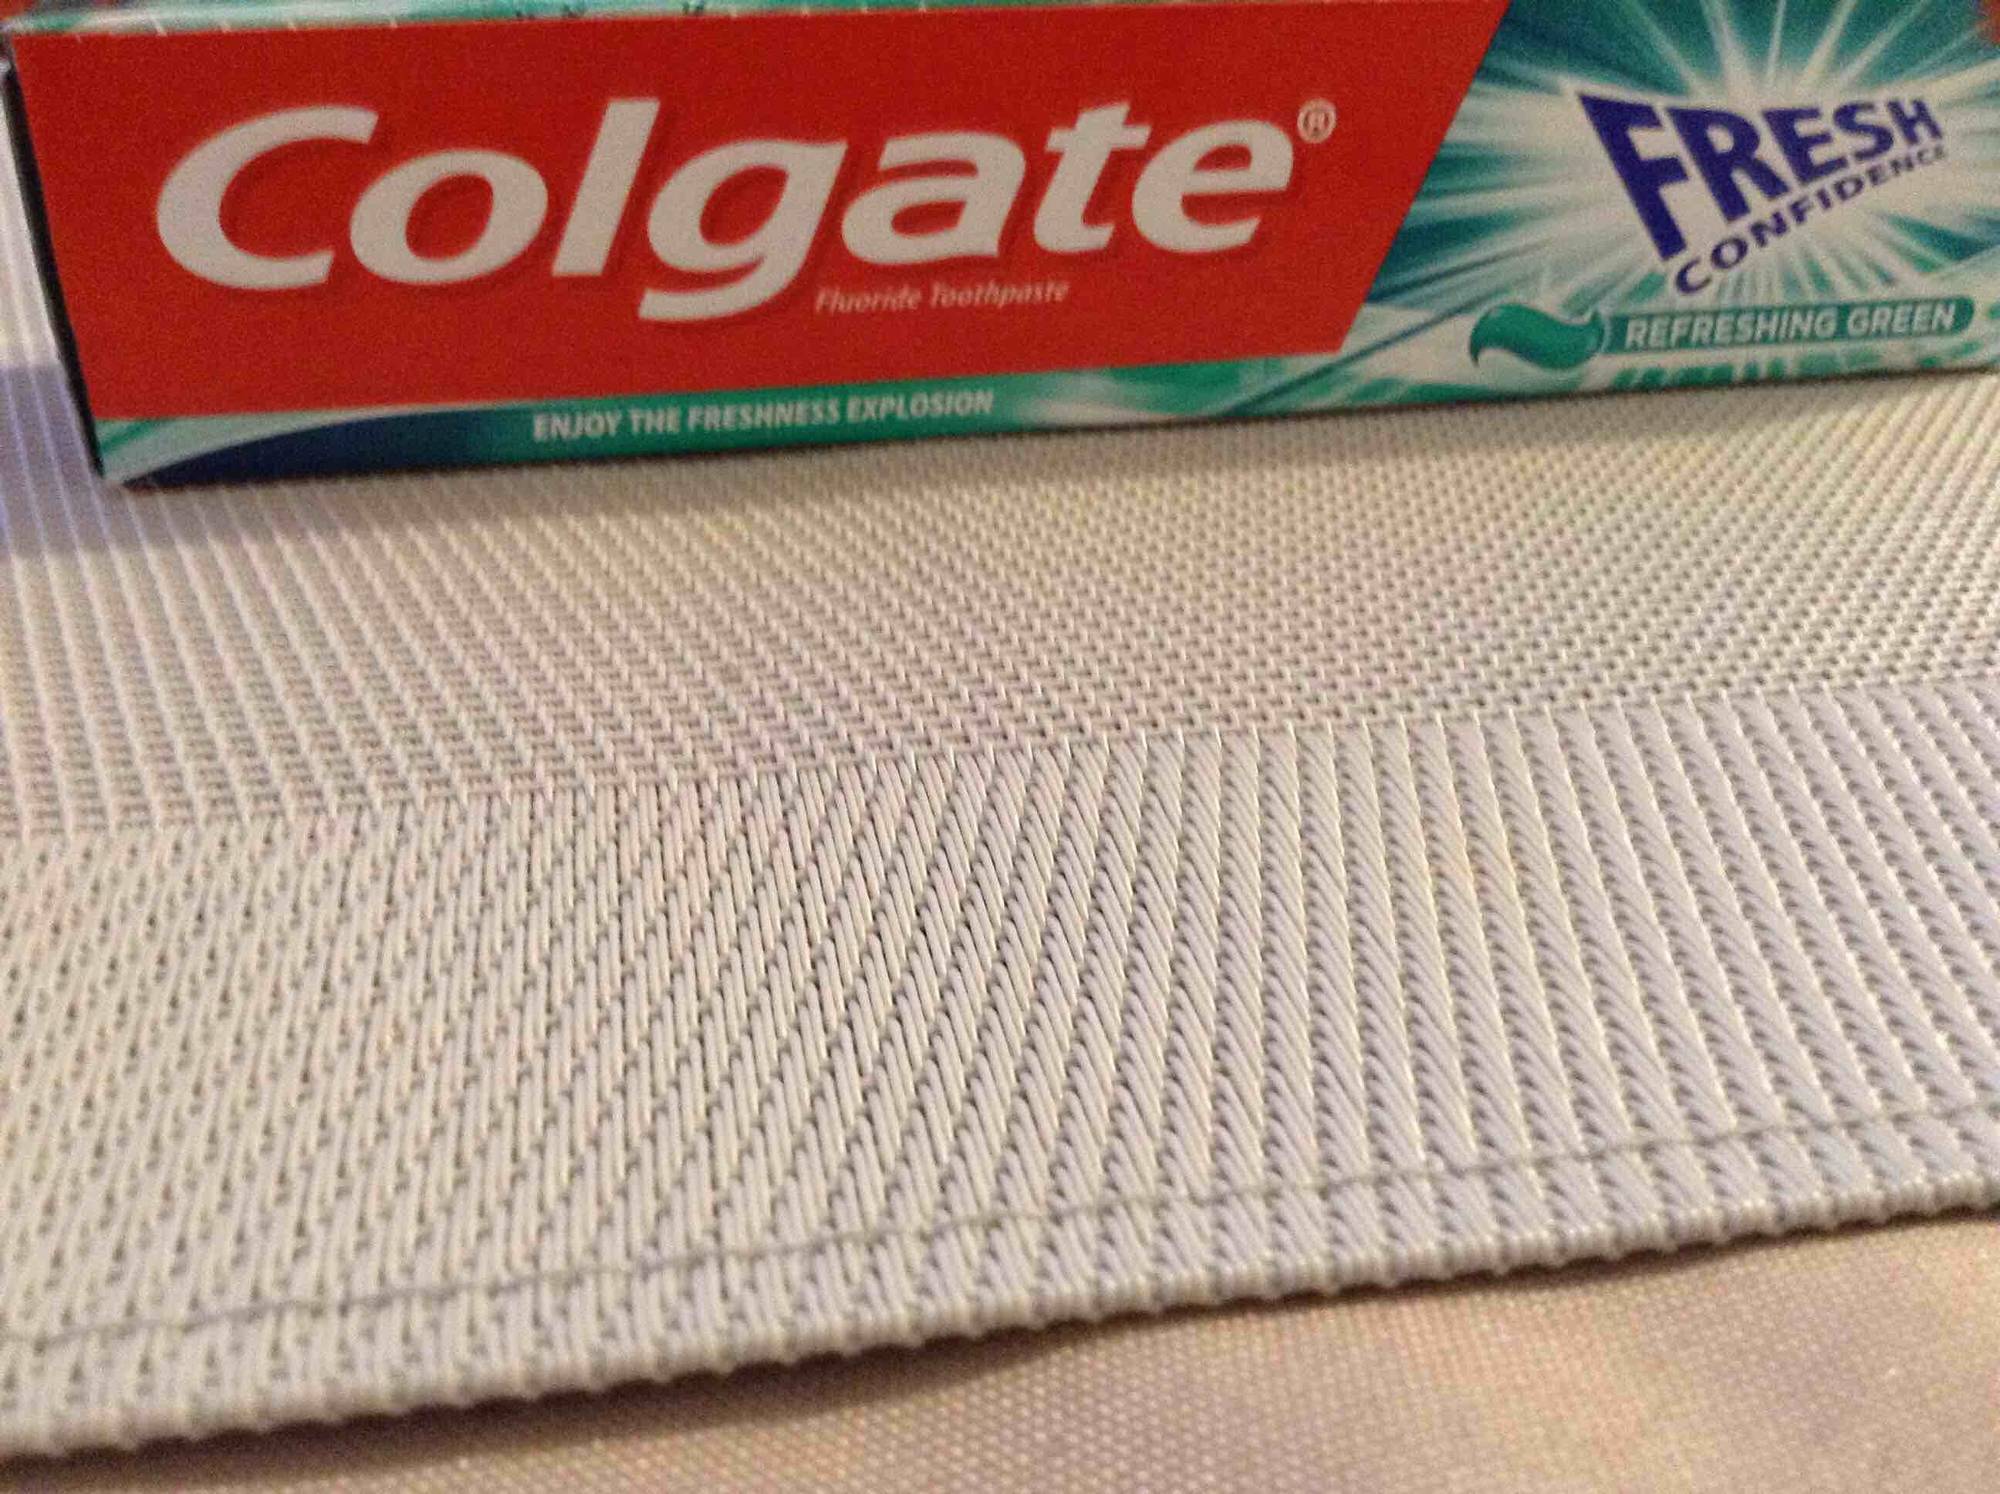 COLGATE - Fresh confidence - Dentifrice